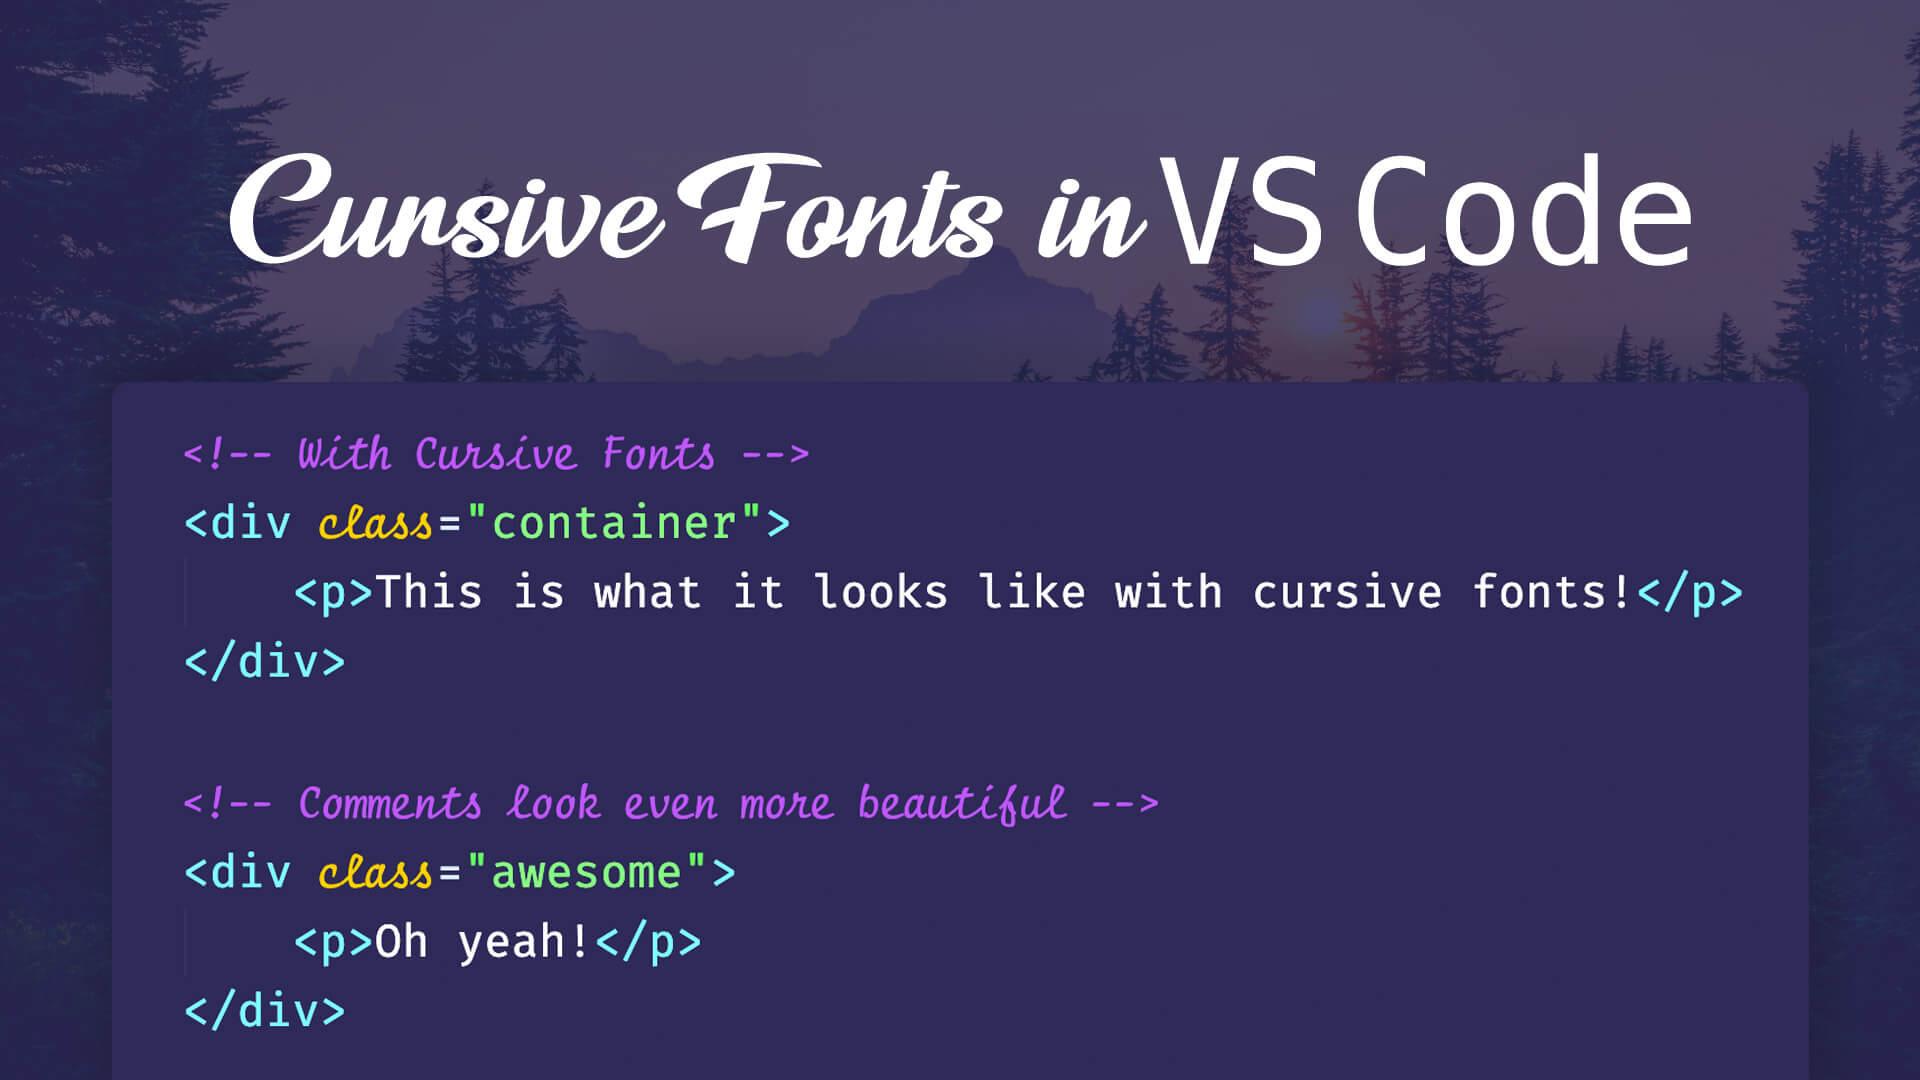 Adding Cursive Fonts to VS Code